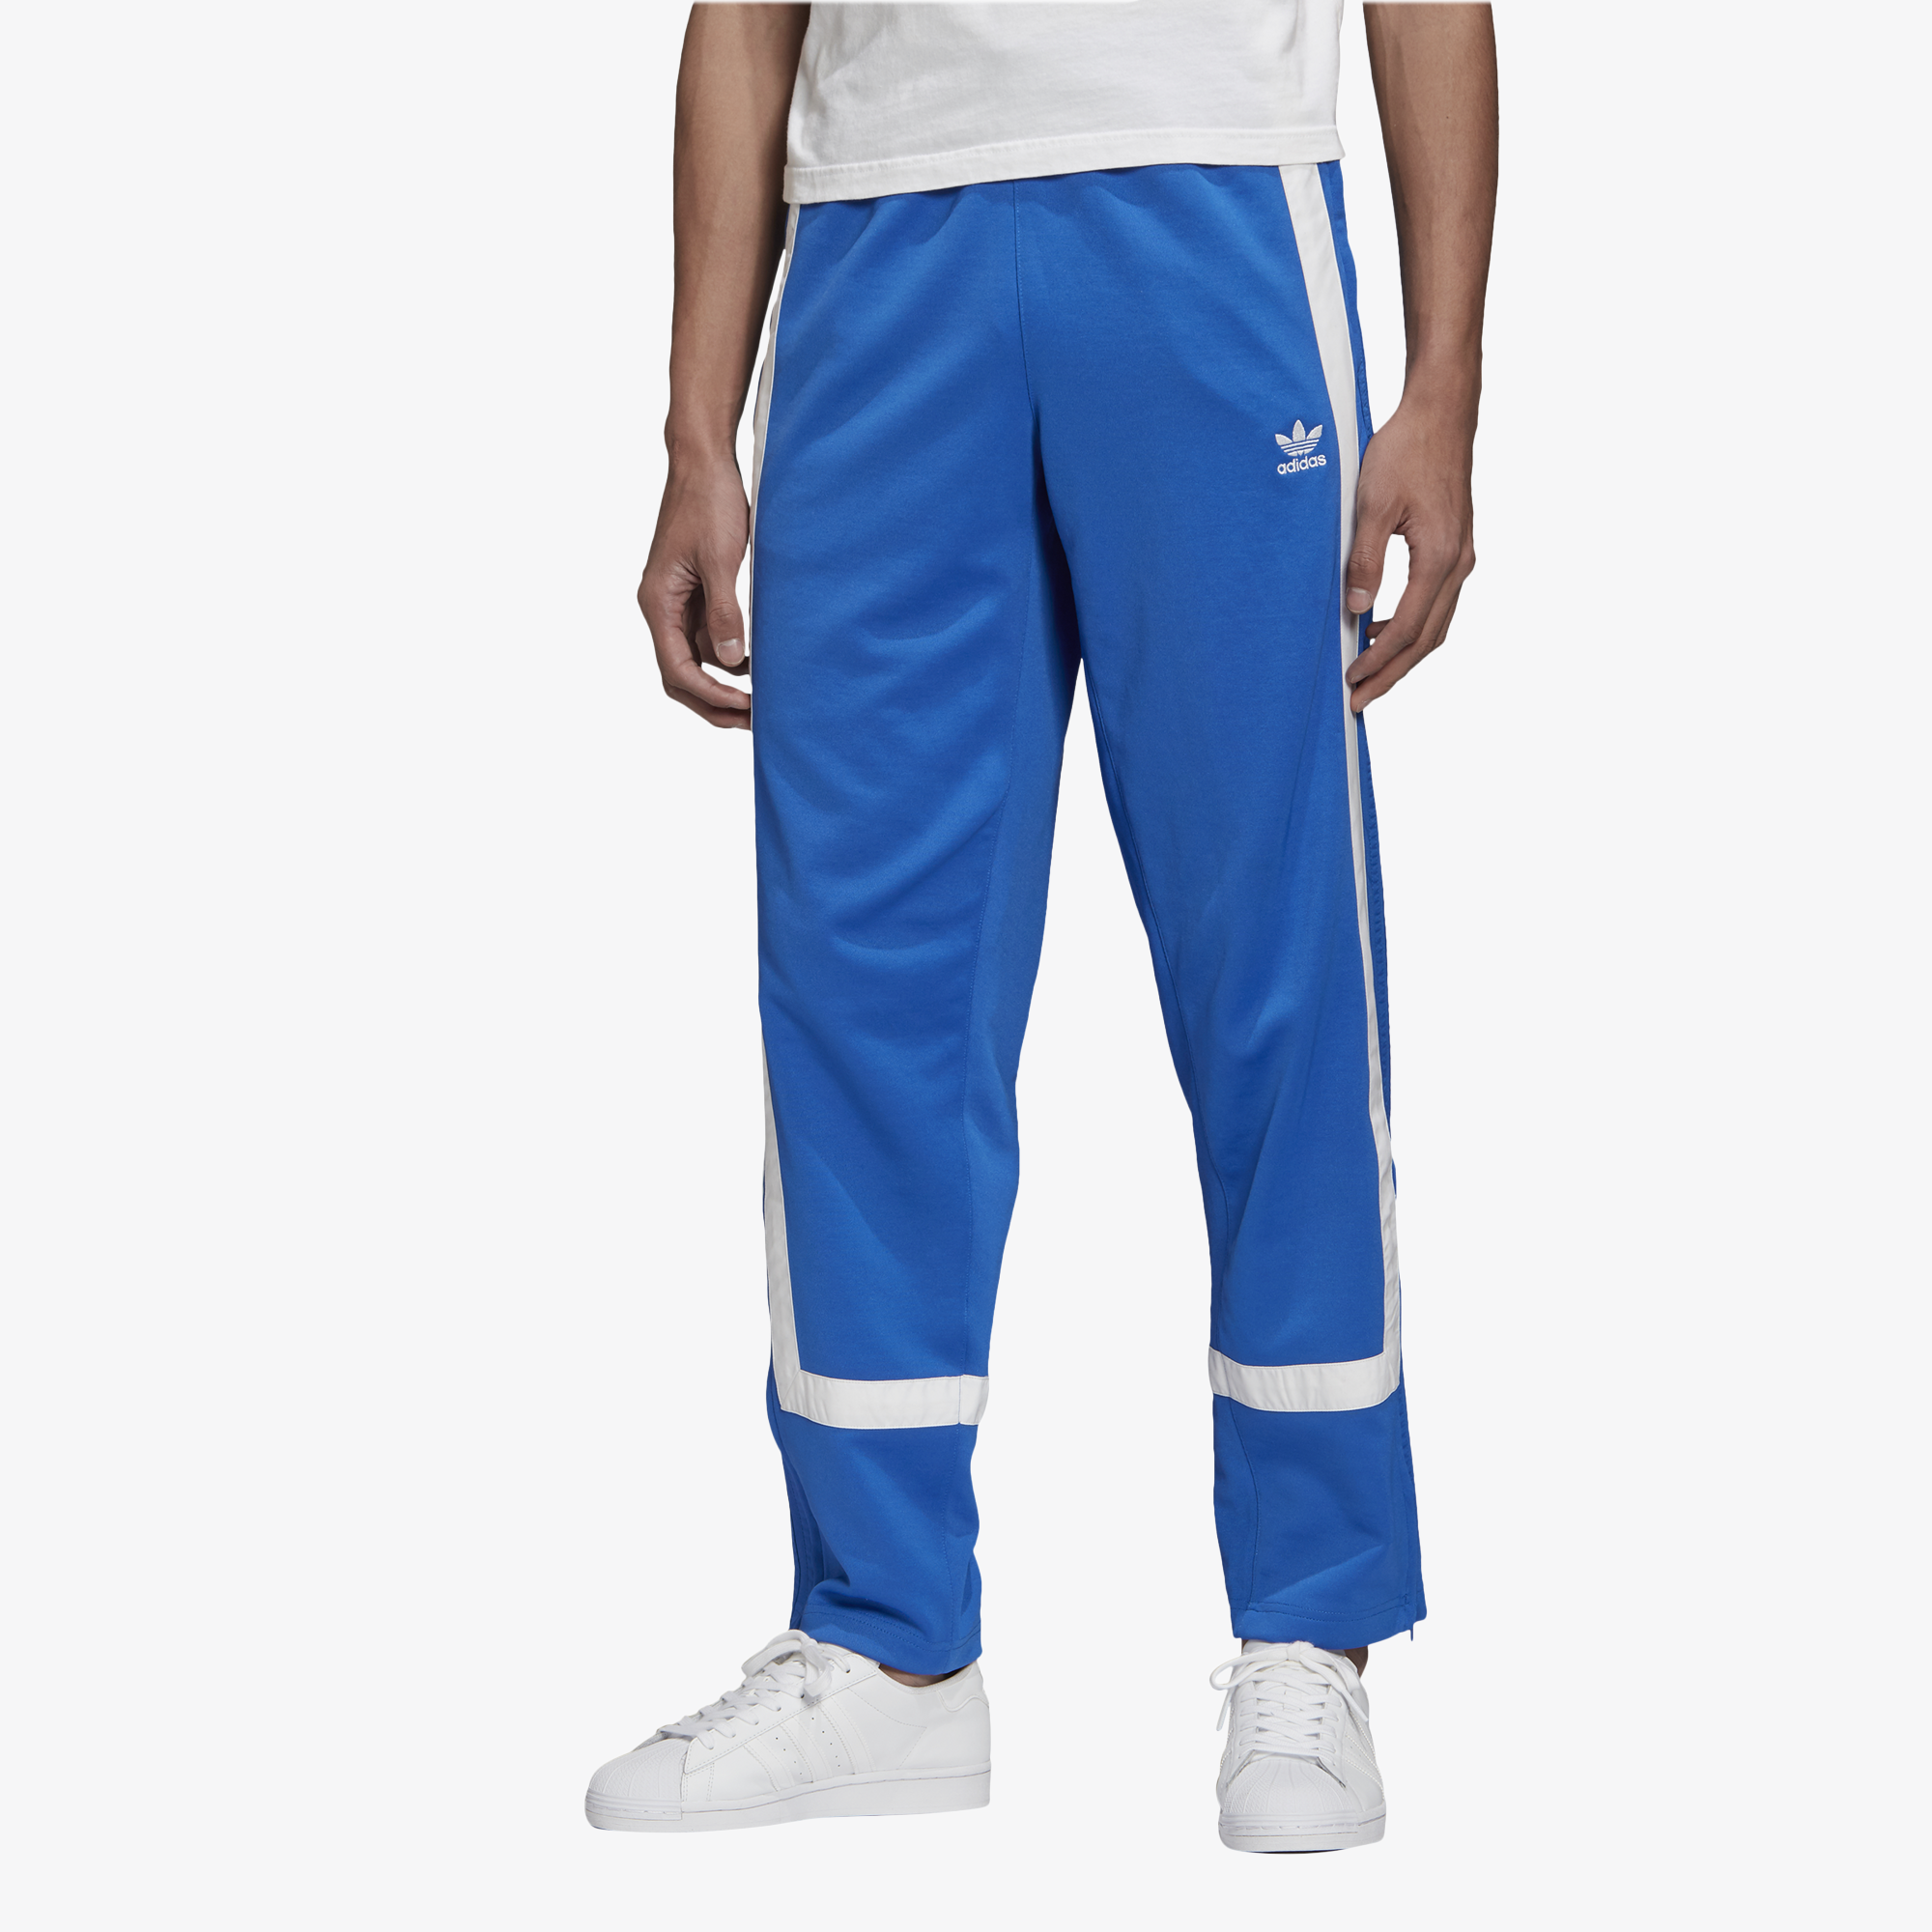 mens blue adidas pants